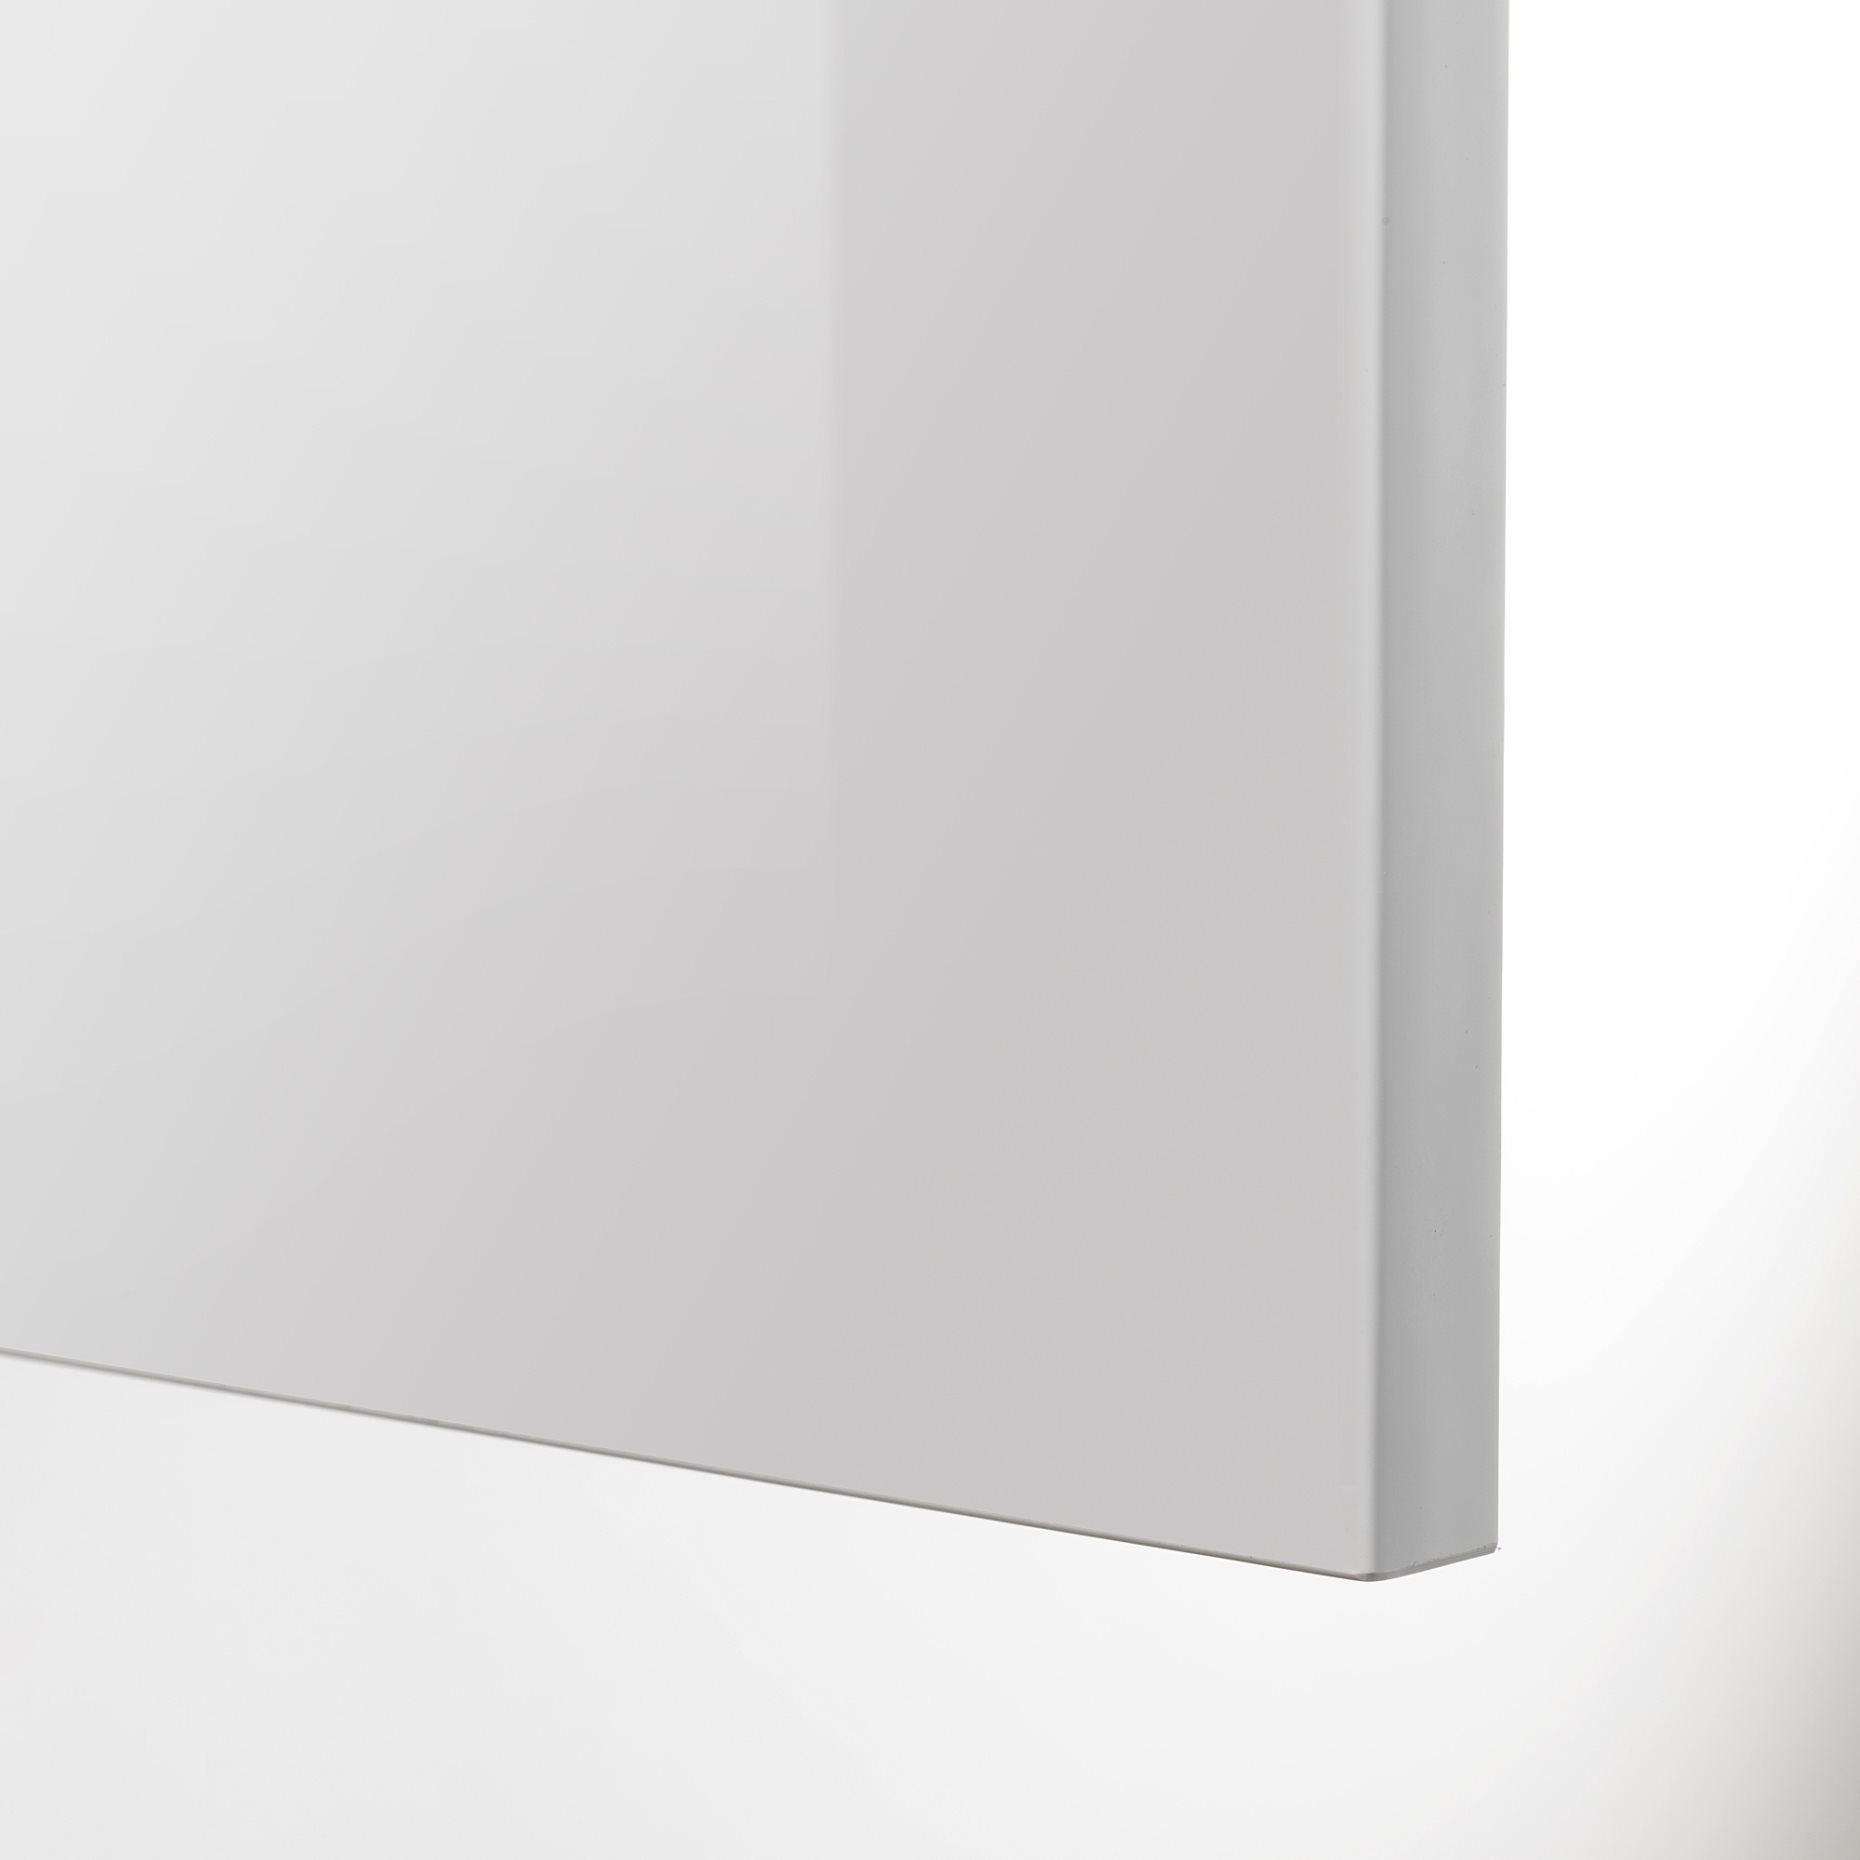 METOD, ντουλάπι βάσης με ράφια, 40x60 cm, 094.682.39